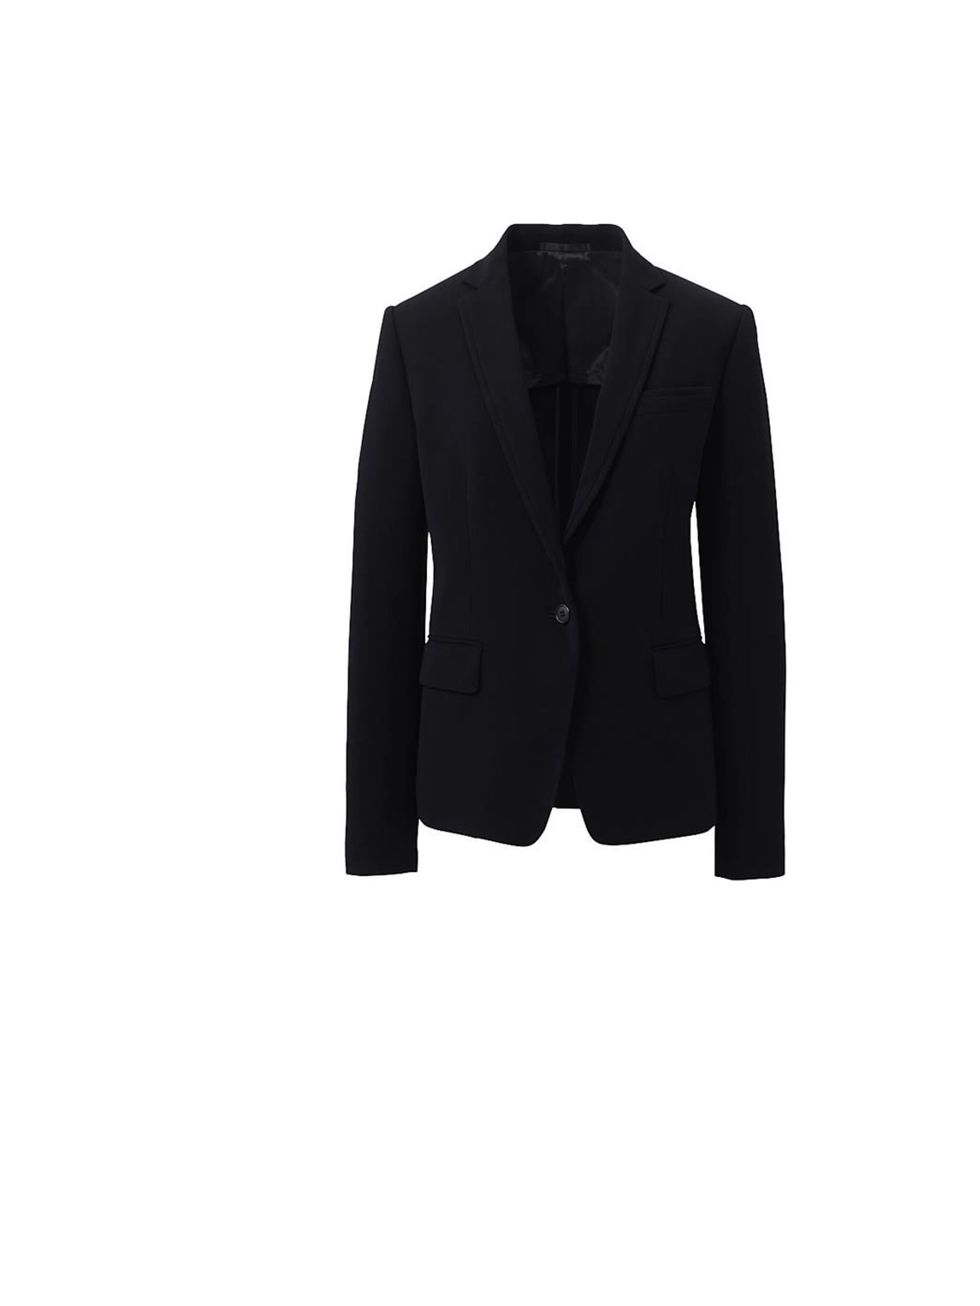 <p><a href="http://shop.uniqlo.com/uk/goods/072312">Uniqlo</a> tailored jacket, £49.90</p>